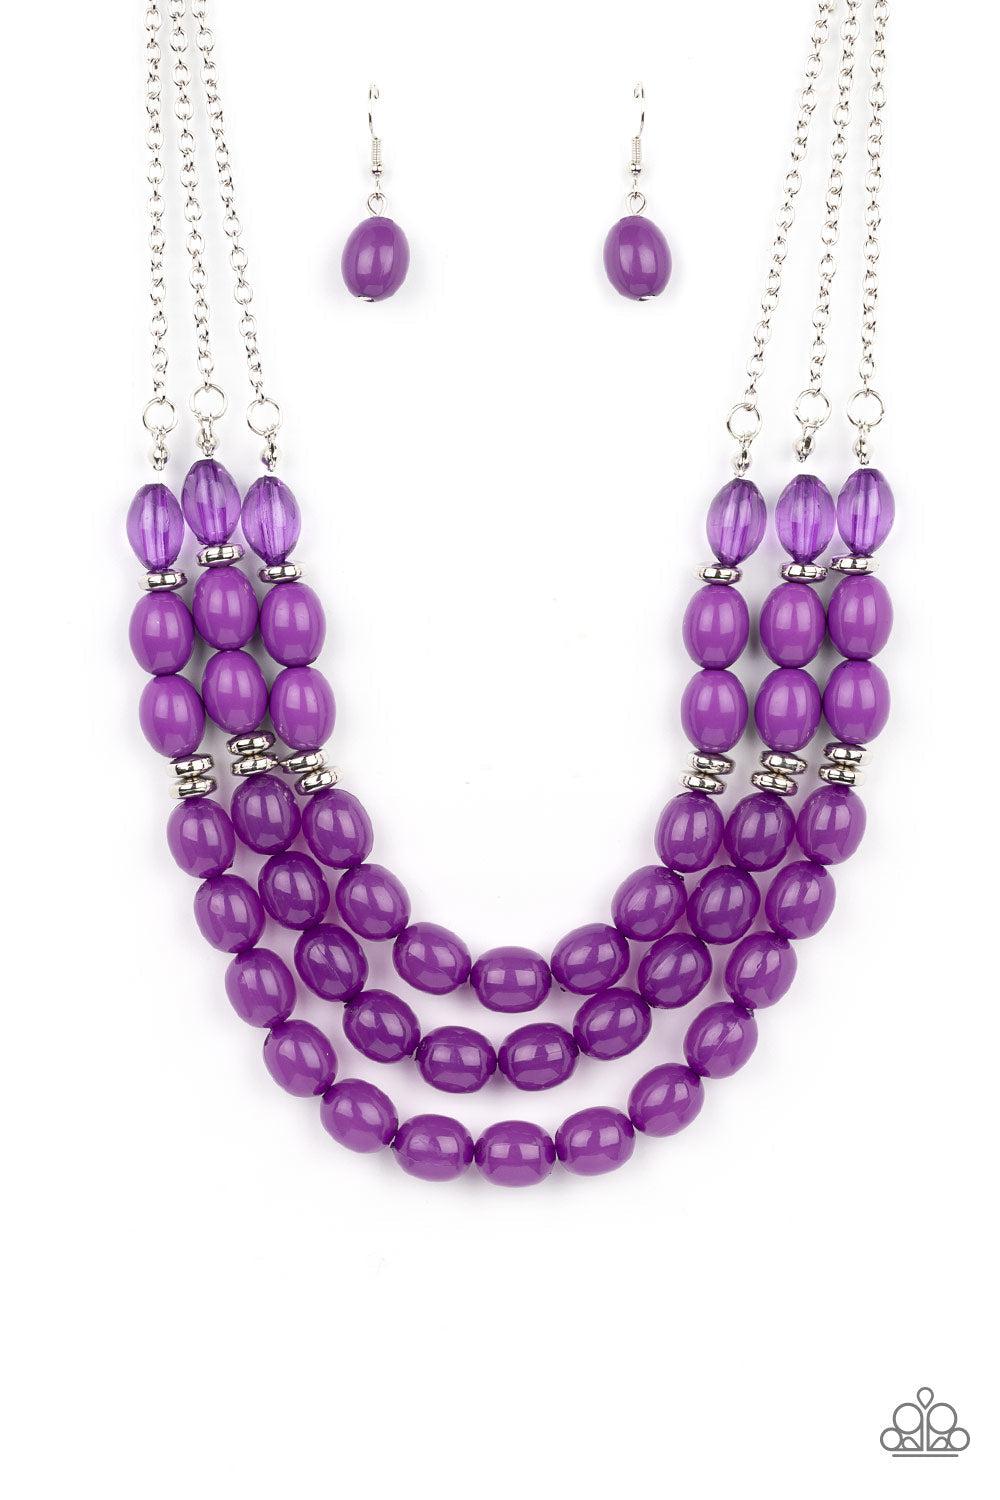 Coastal Cruise Purple Necklace - Paparazzi Accessories- lightbox - CarasShop.com - $5 Jewelry by Cara Jewels